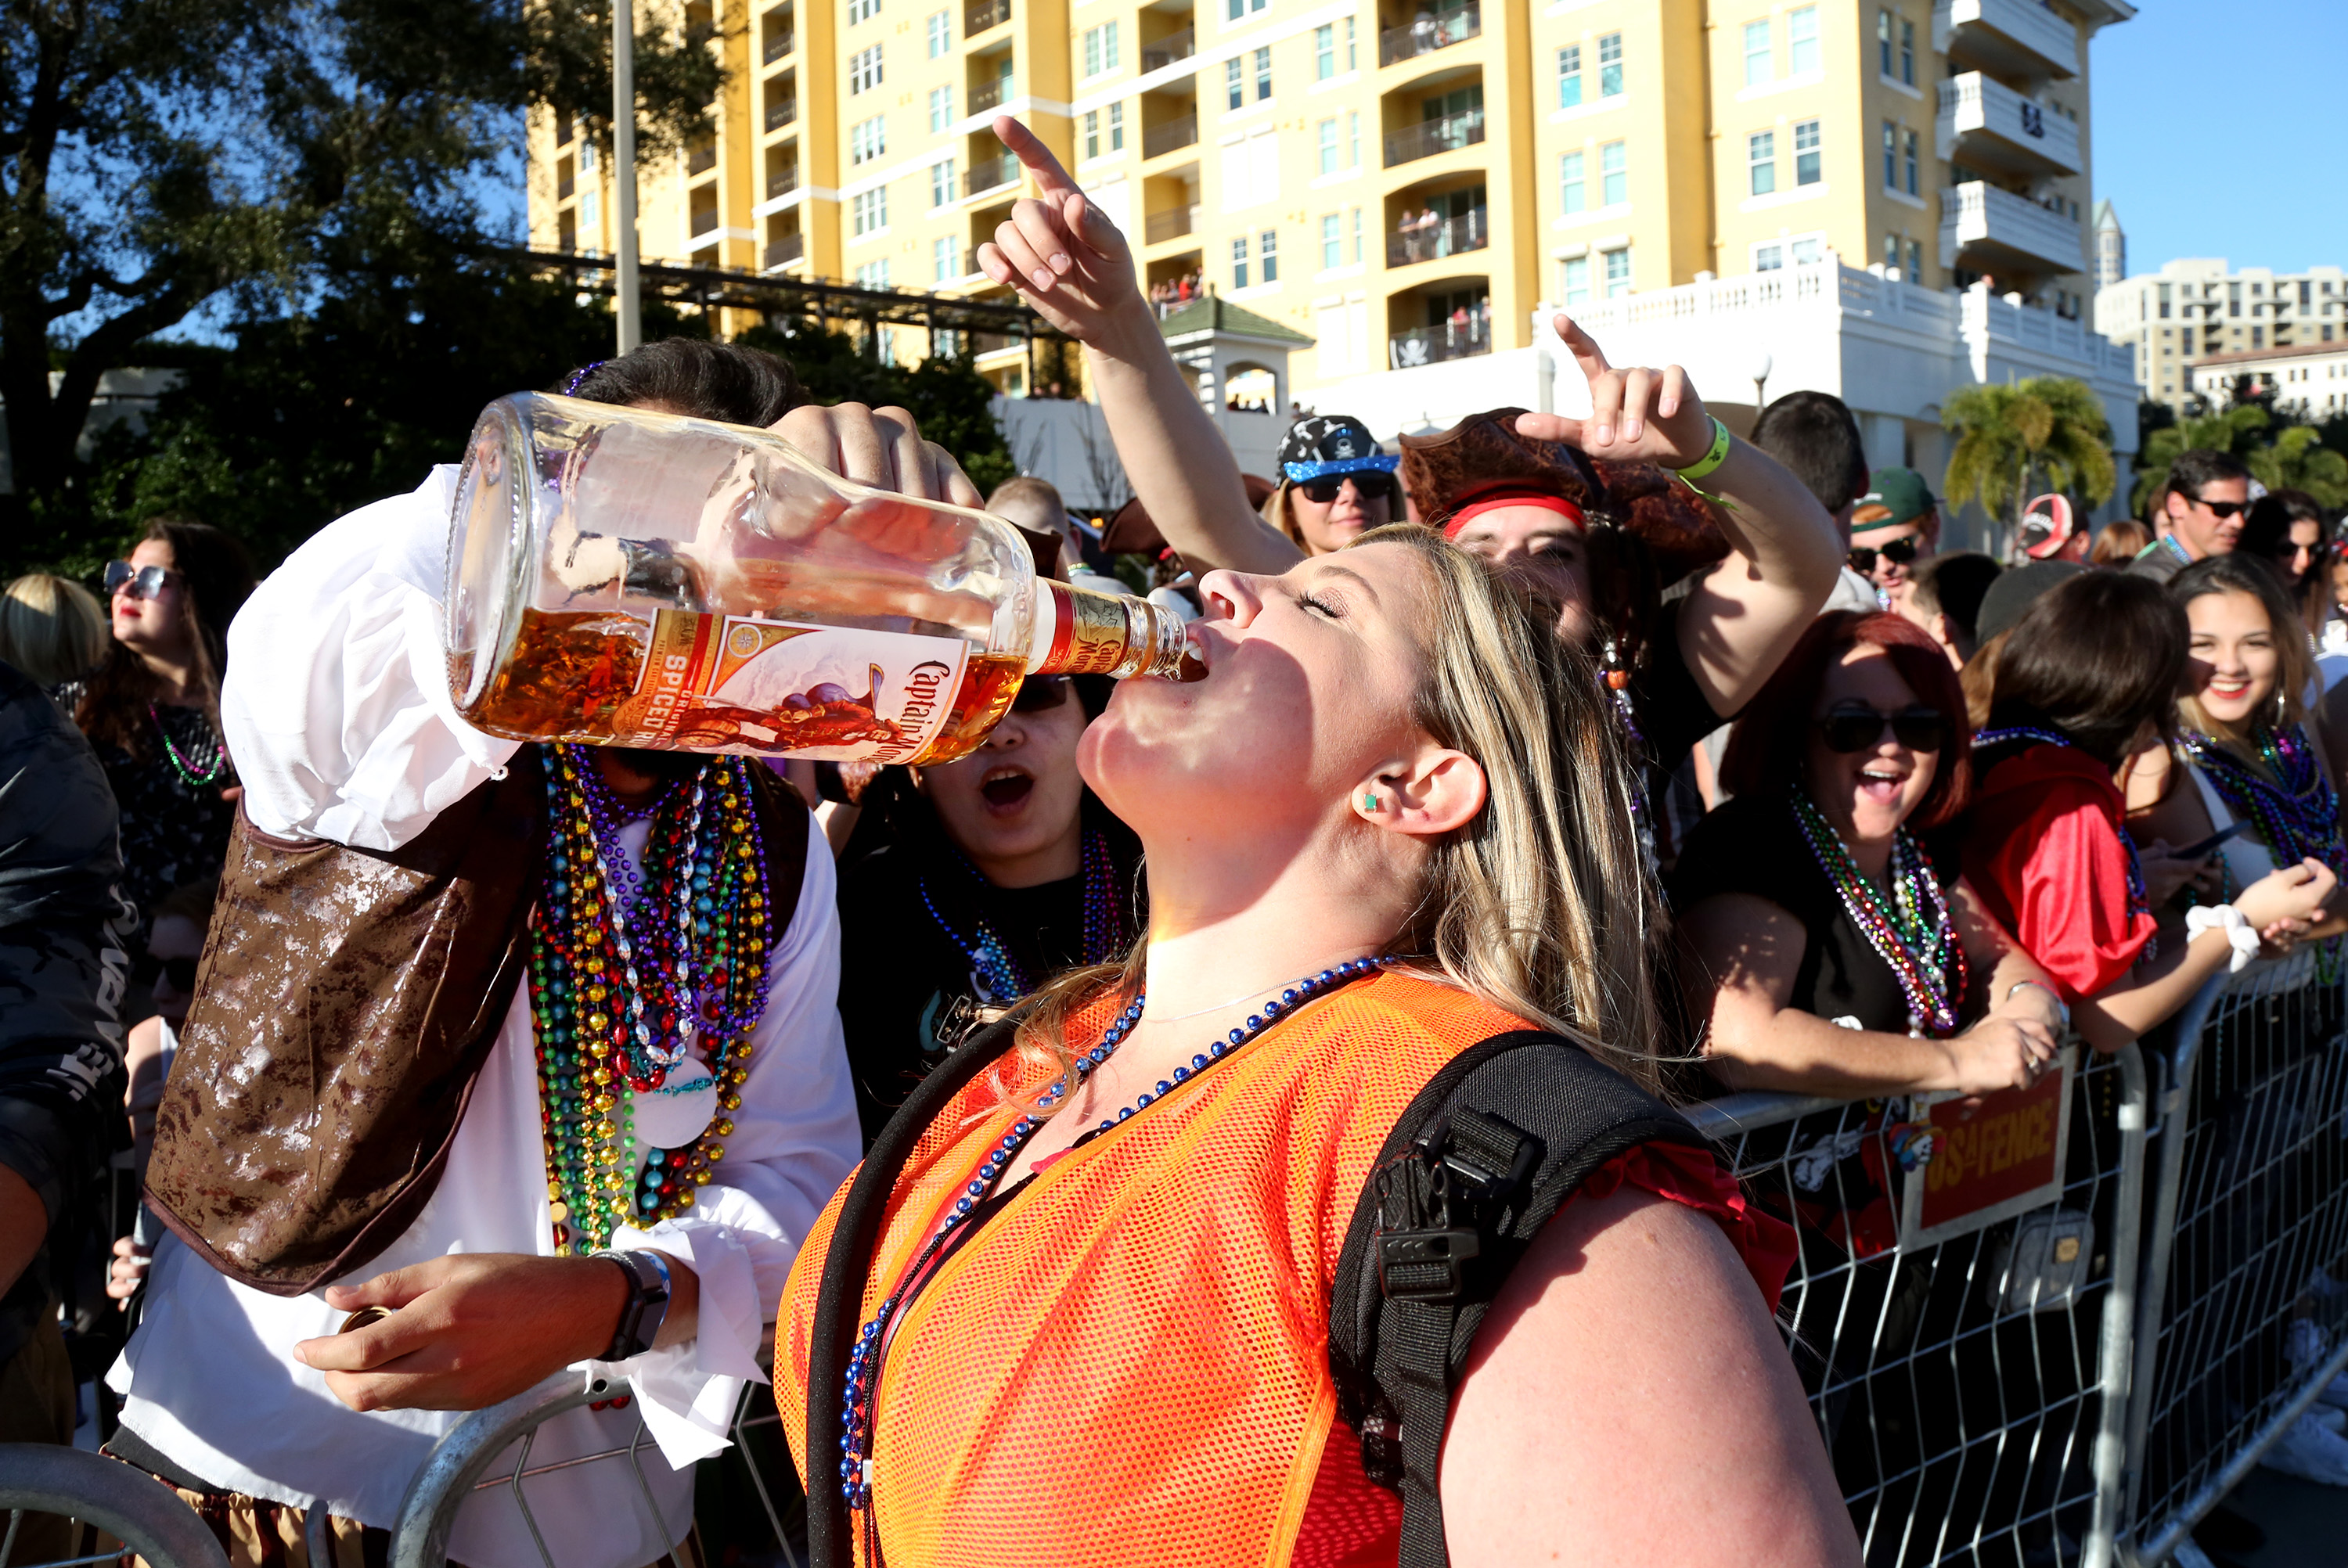 Aargh! Tampa delays Gasparilla pirate festival until 2022